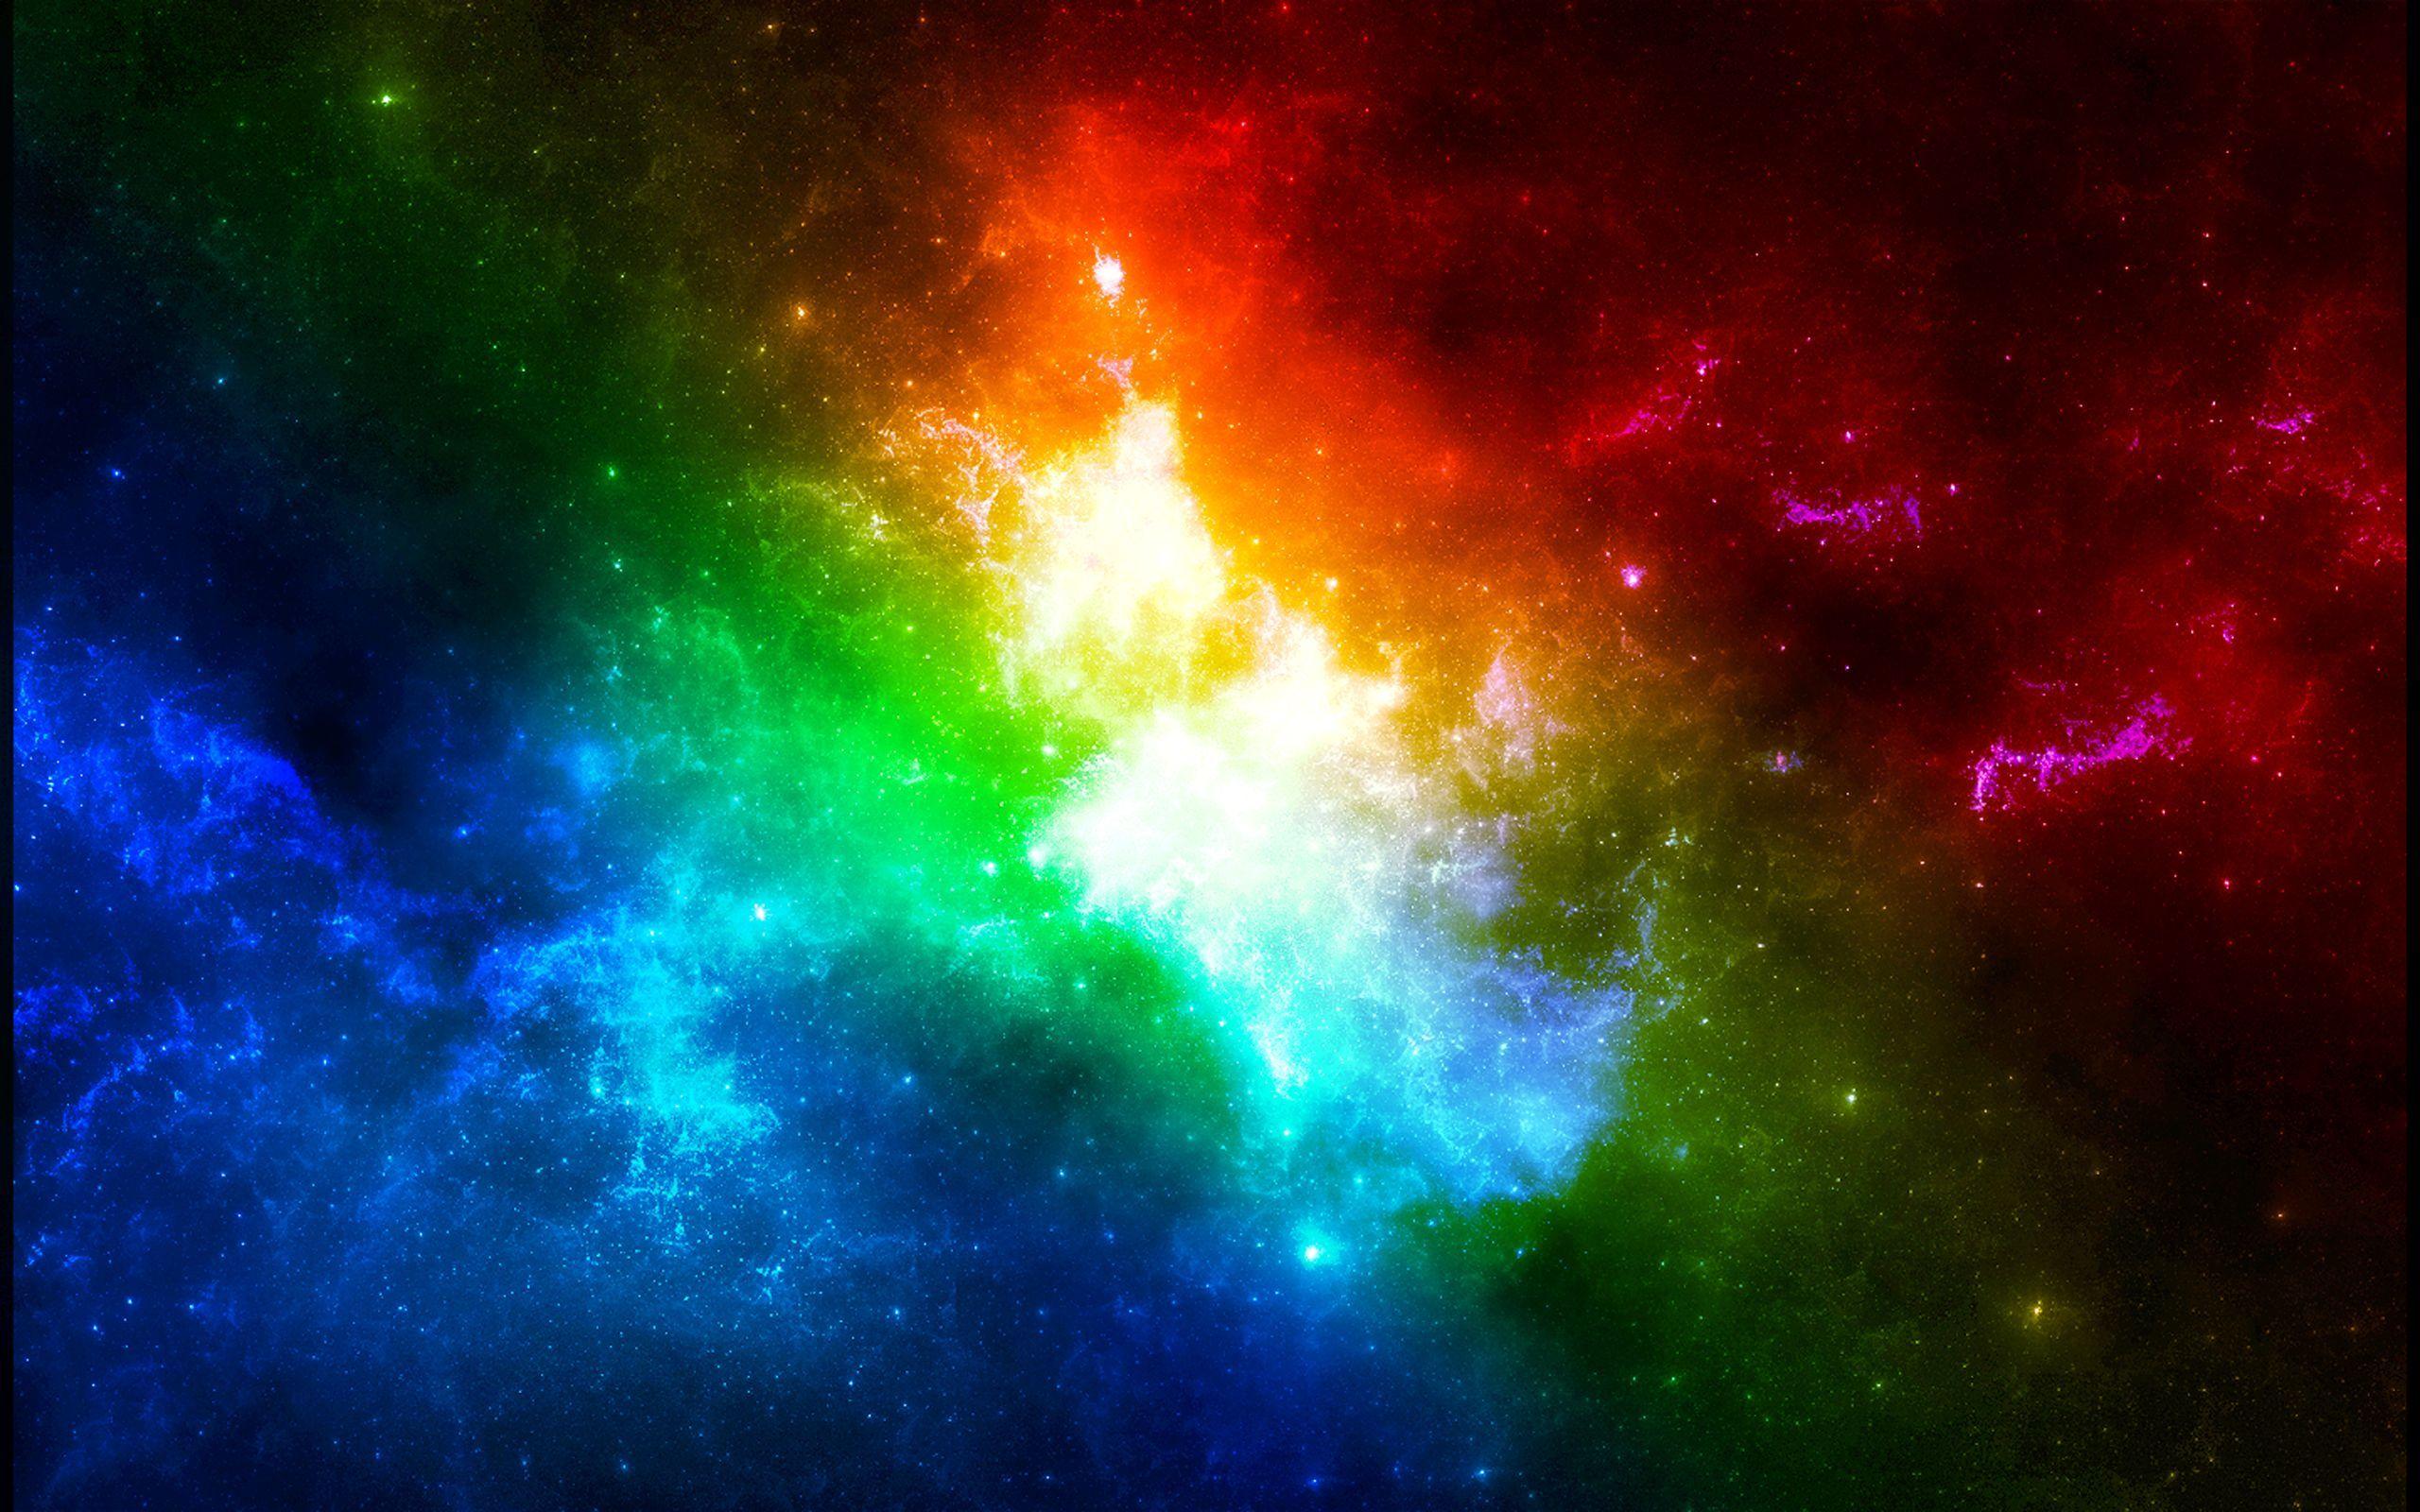 Rainbow Galaxy Wallpapers Top Free Rainbow Galaxy Backgrounds